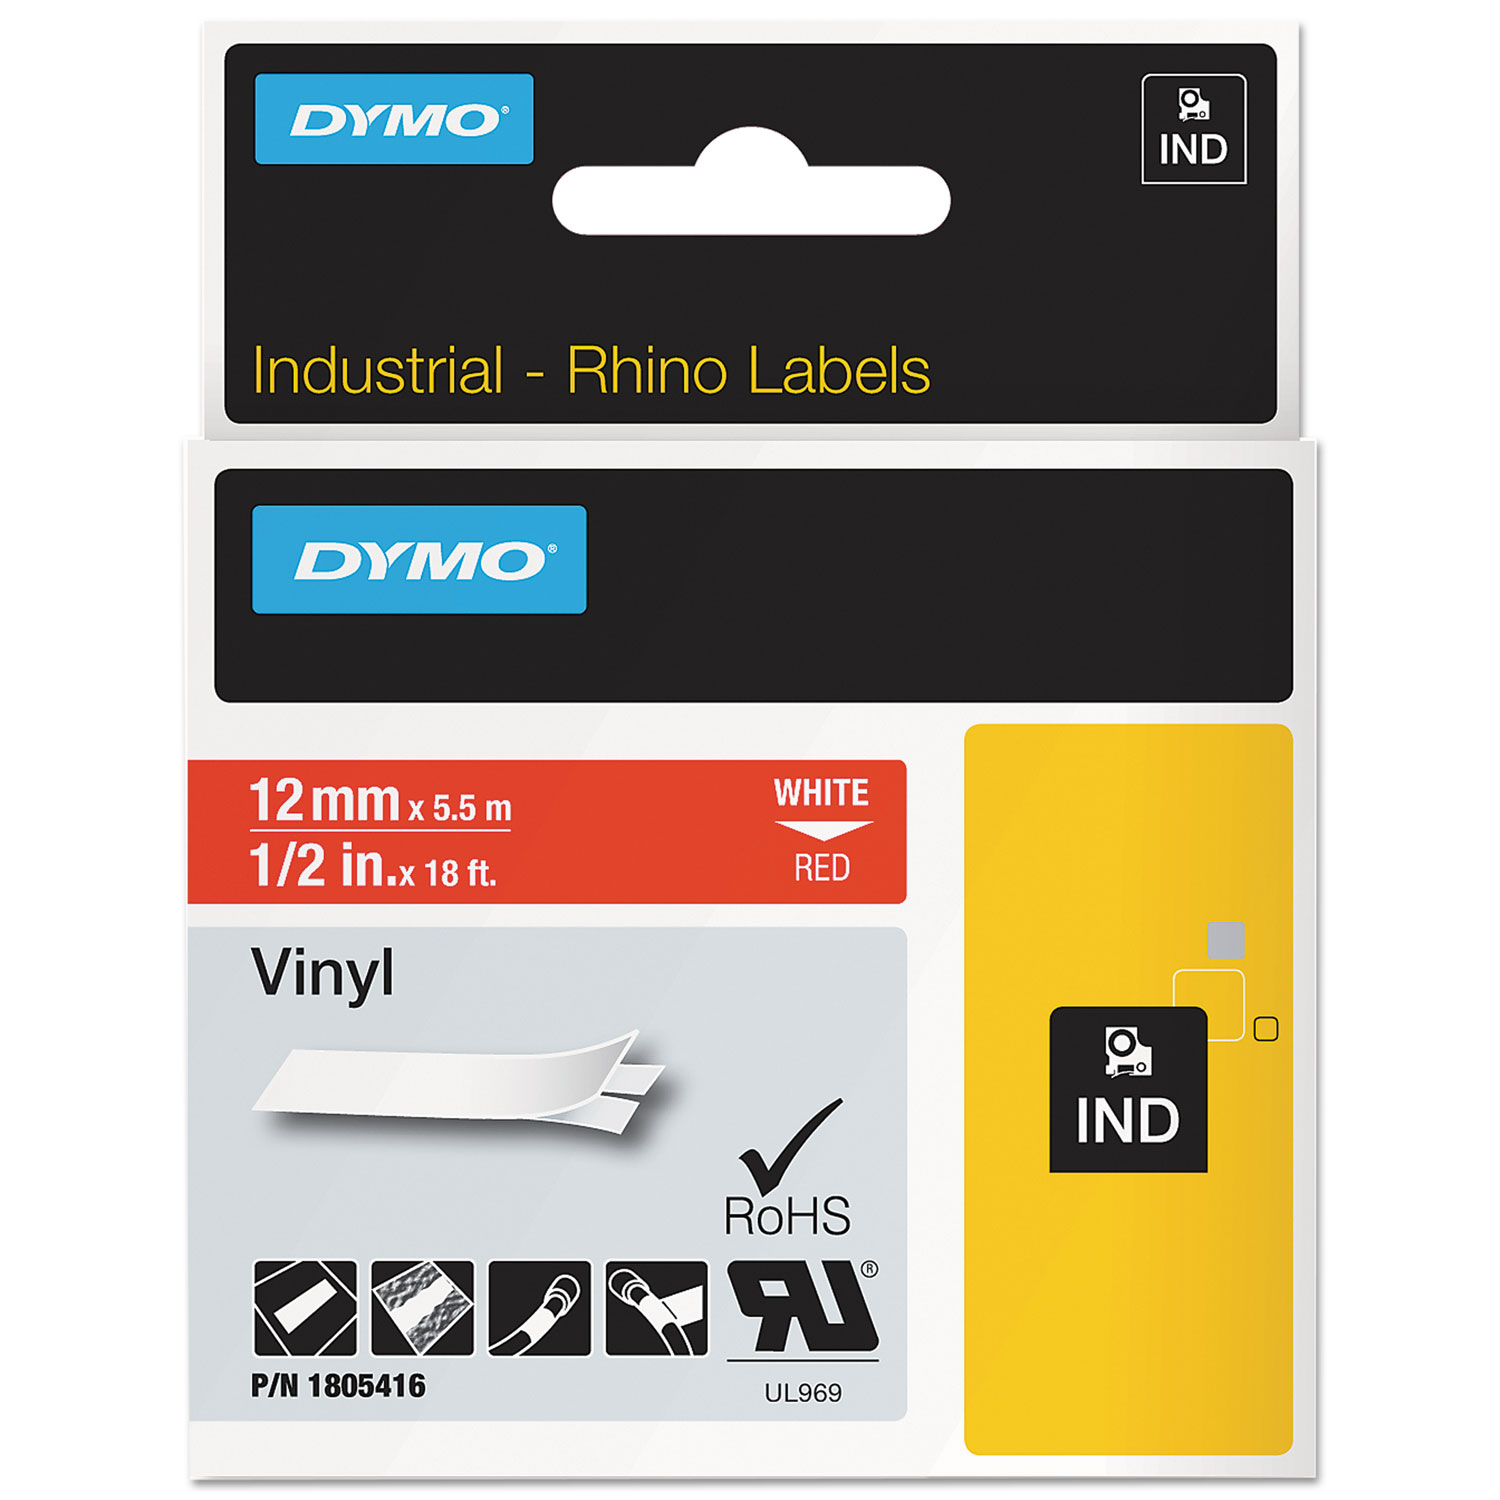  DYMO 1805416 Rhino Permanent Vinyl Industrial Label Tape, 0.5 x 18 ft, Red/White Print (DYM1805416) 